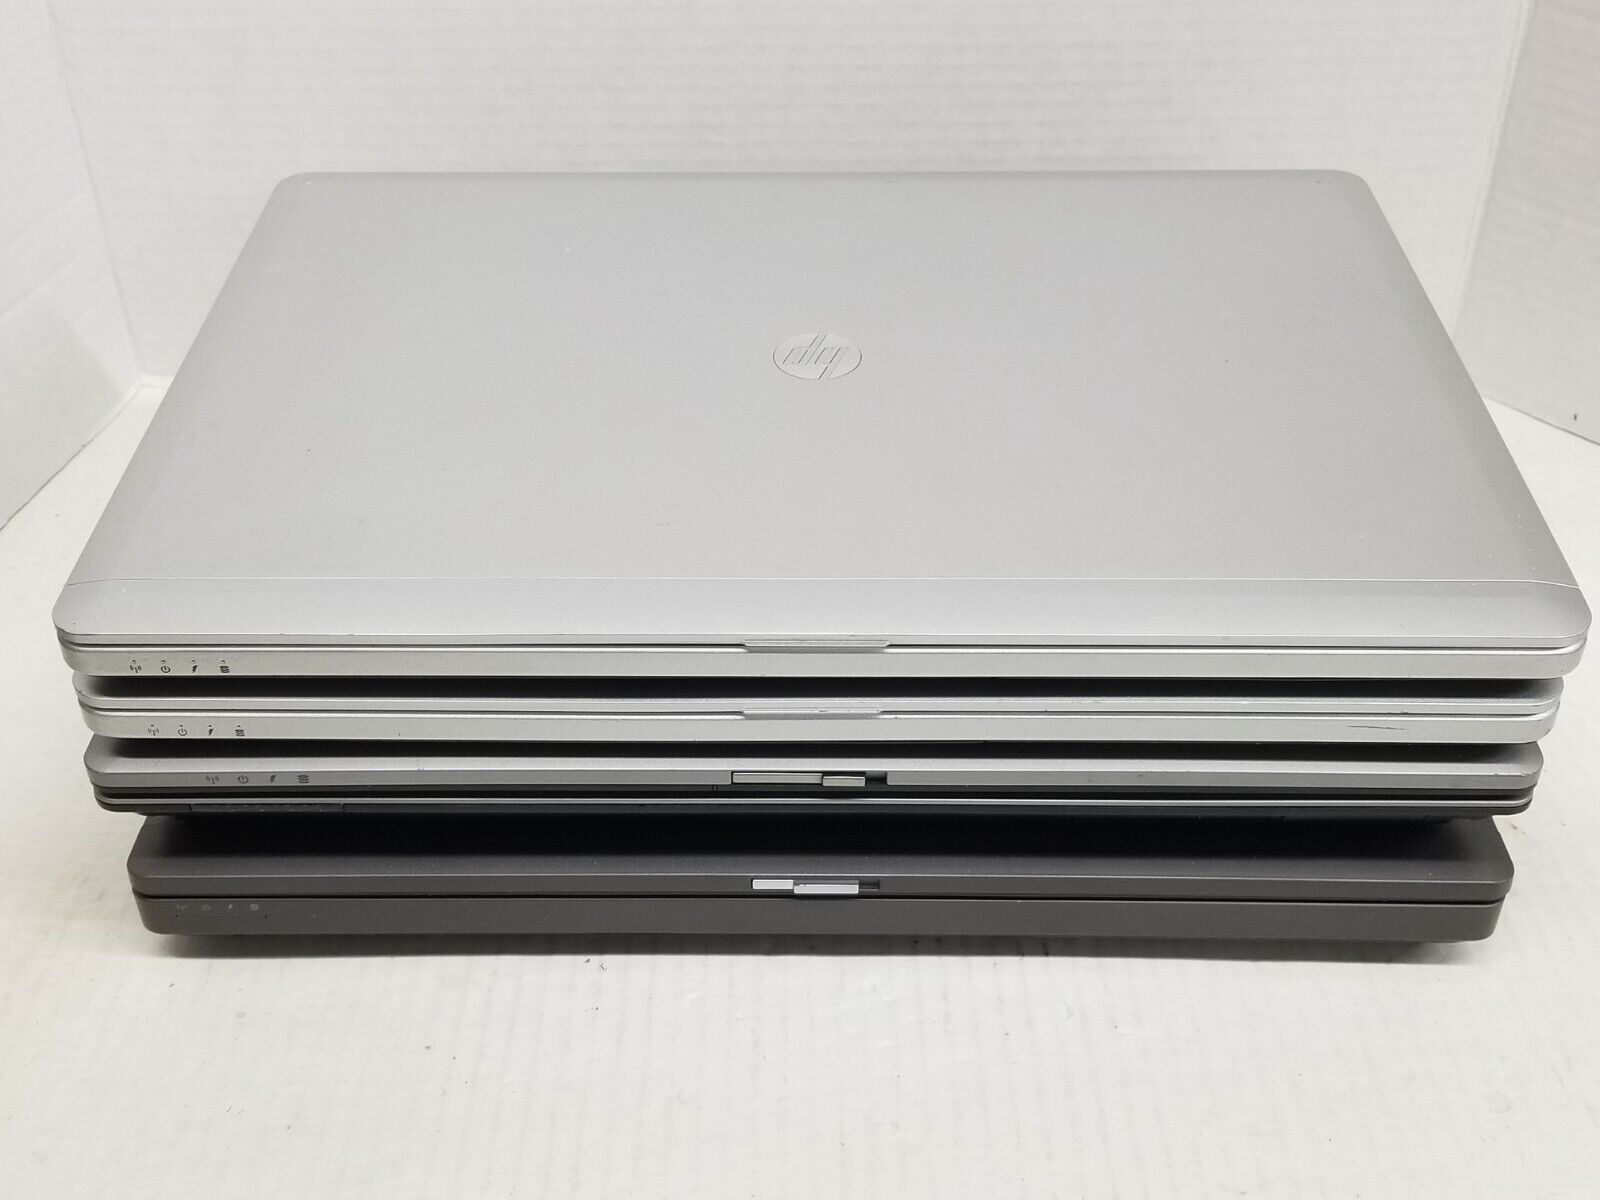 Mixed Lot of 4 HP EliteBook/ProBook - 2x 9480m, 1x 6450b, 1x 6470b